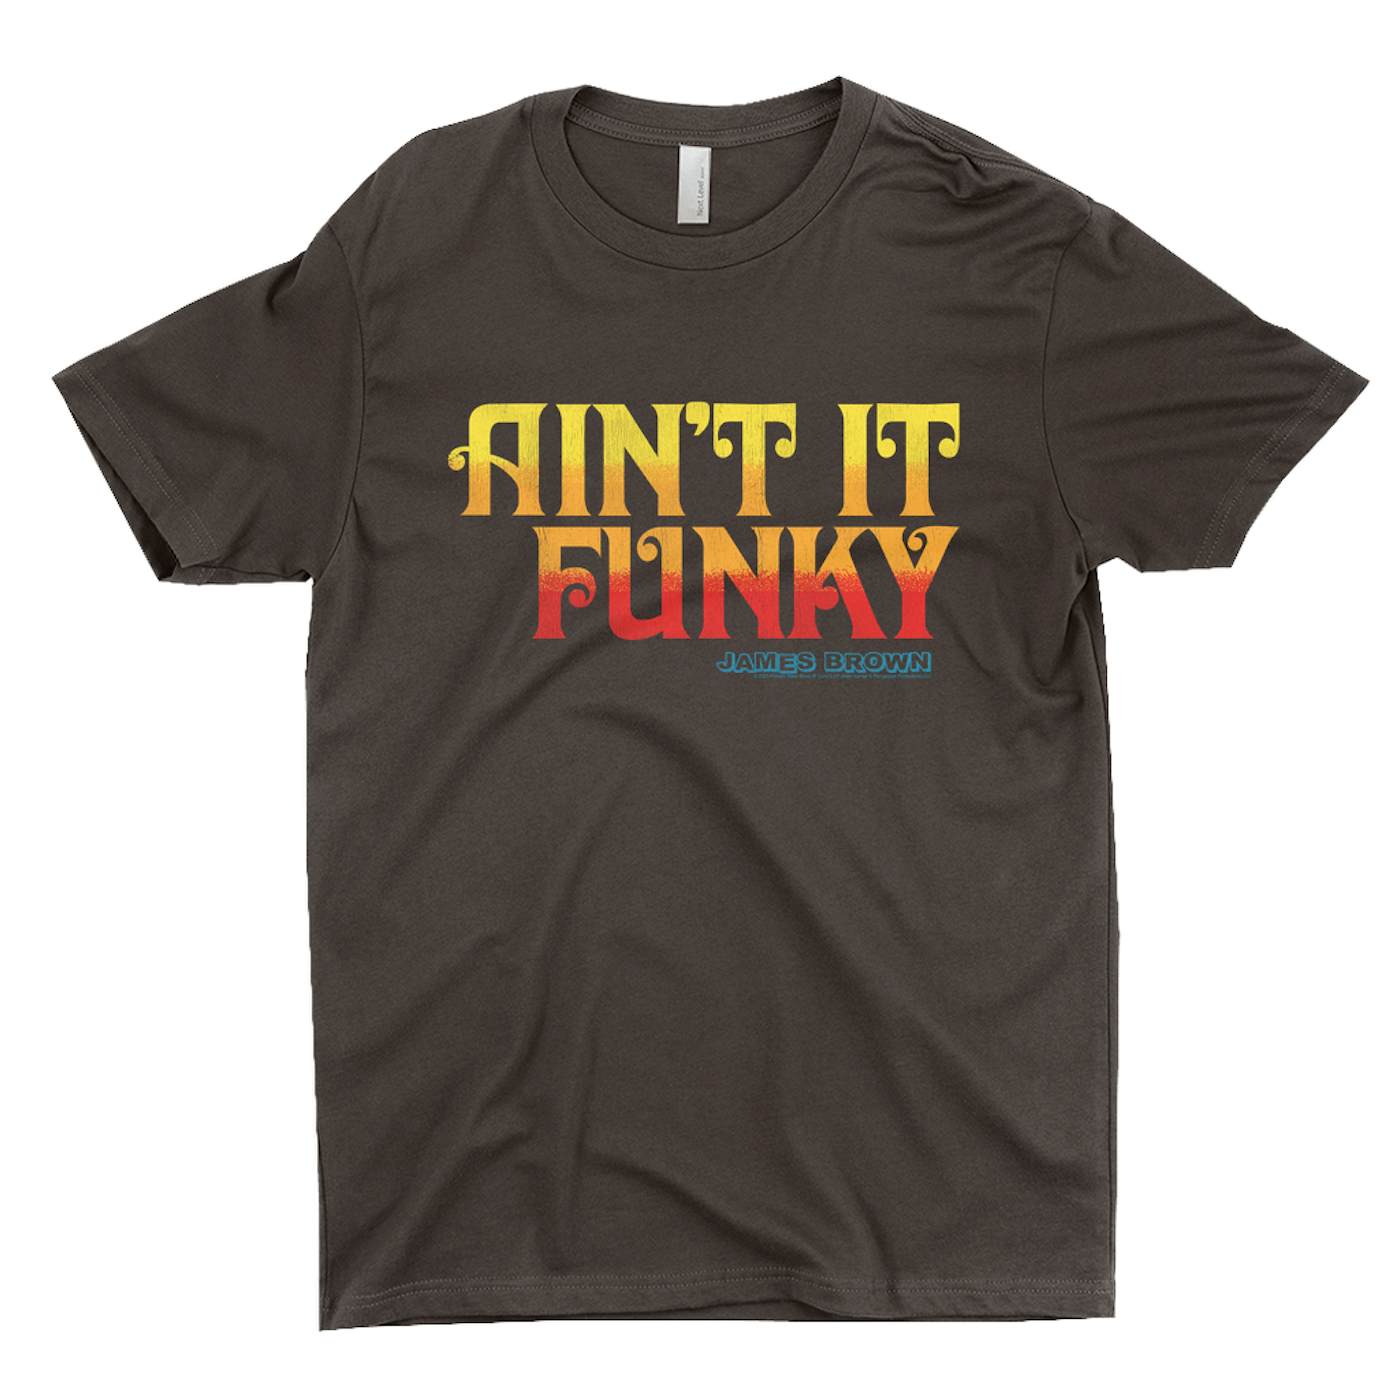 James Brown T-Shirt | Ain't It Funky Groovy Design James Brown Shirt